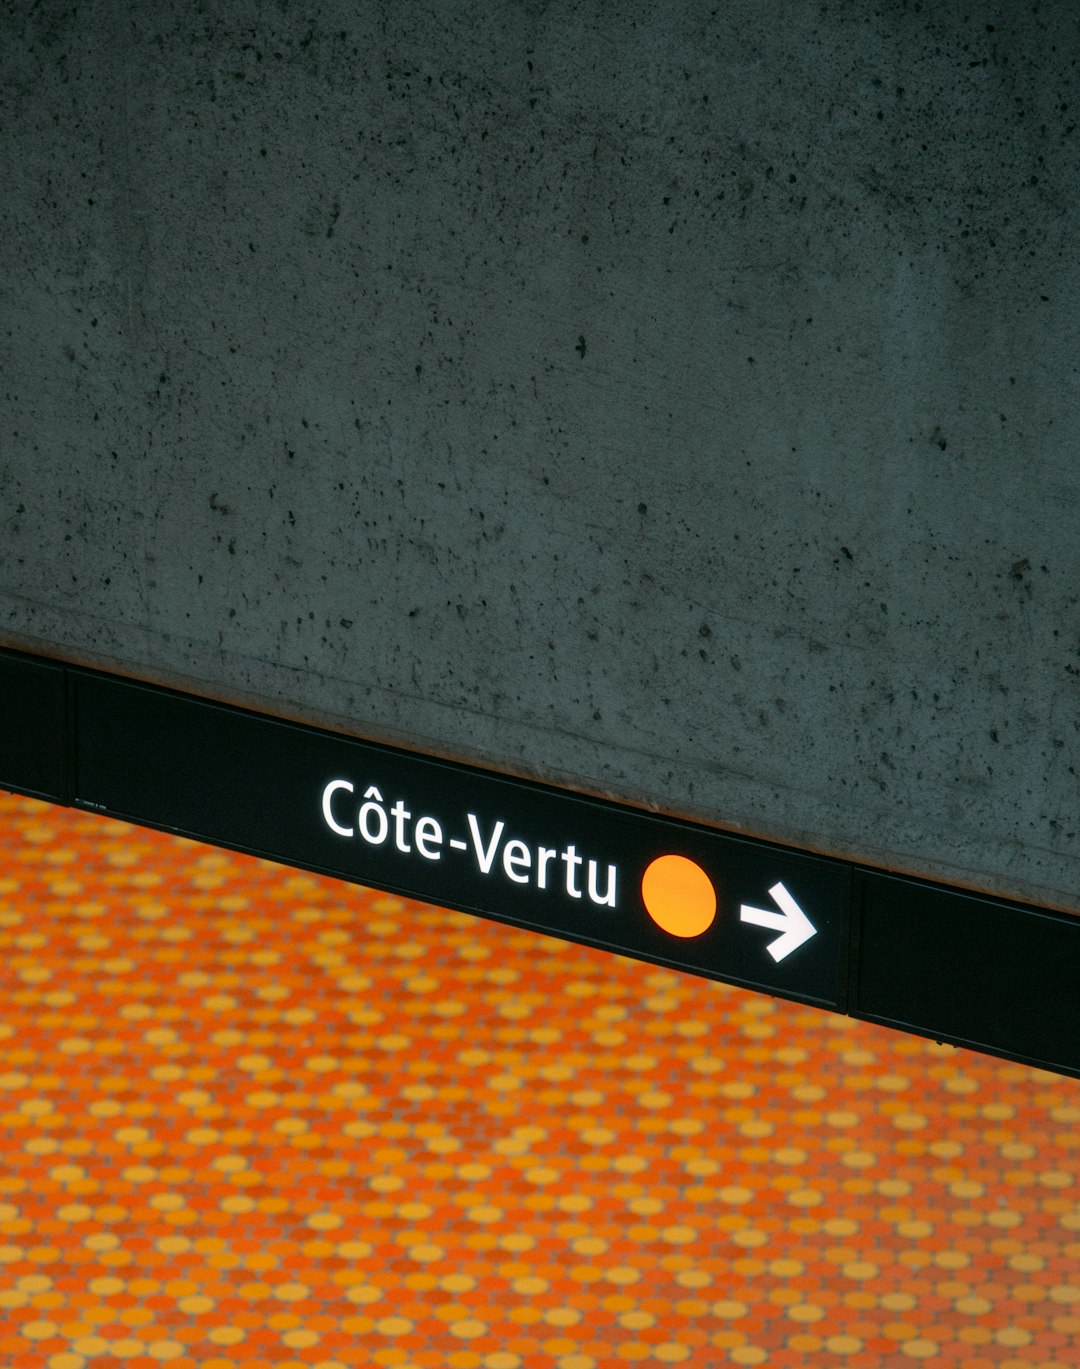 Cote-Vertu logo